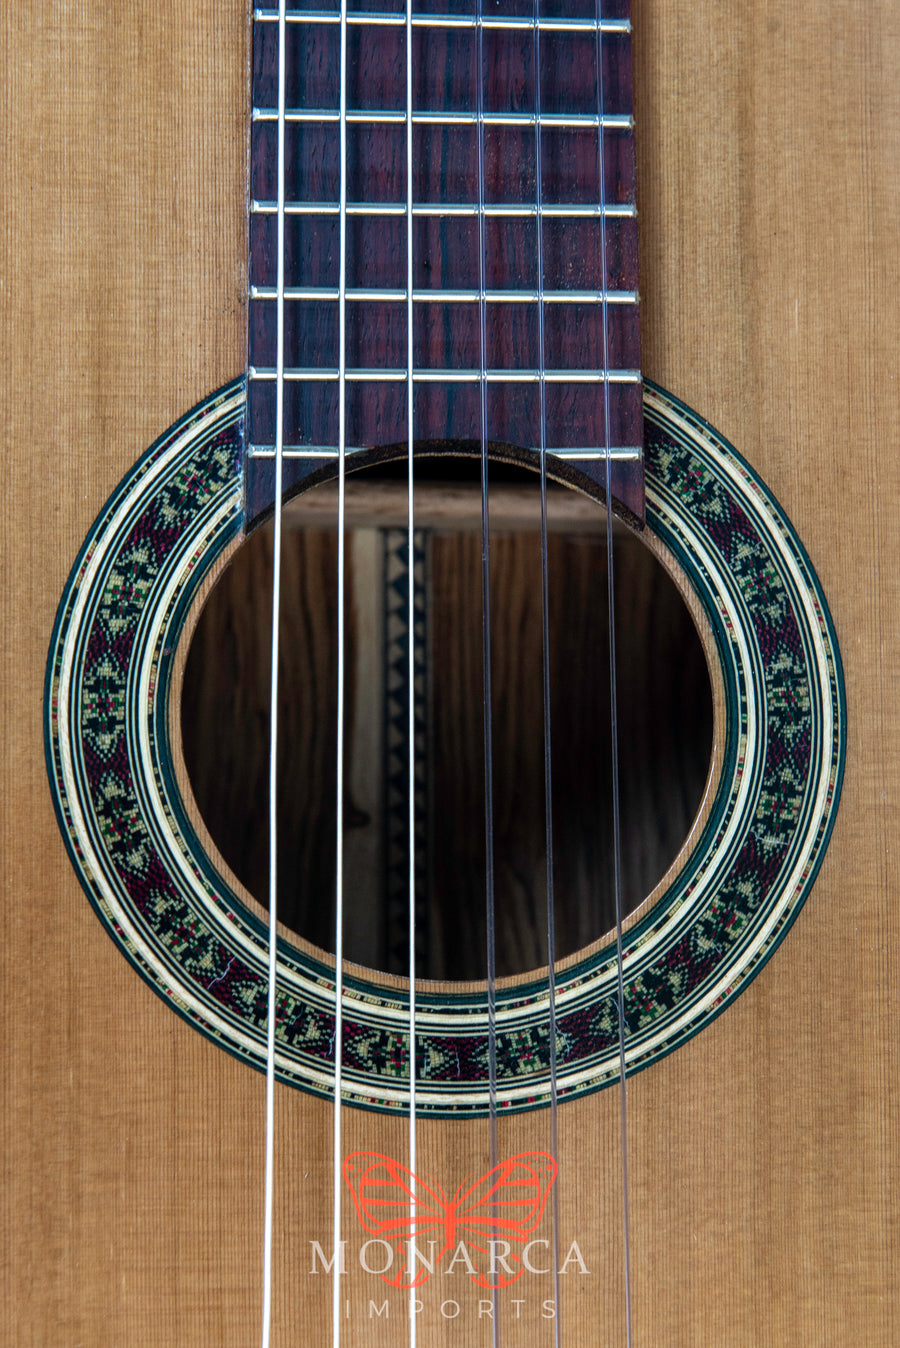 Handmade Guitar from Paracho - Classic